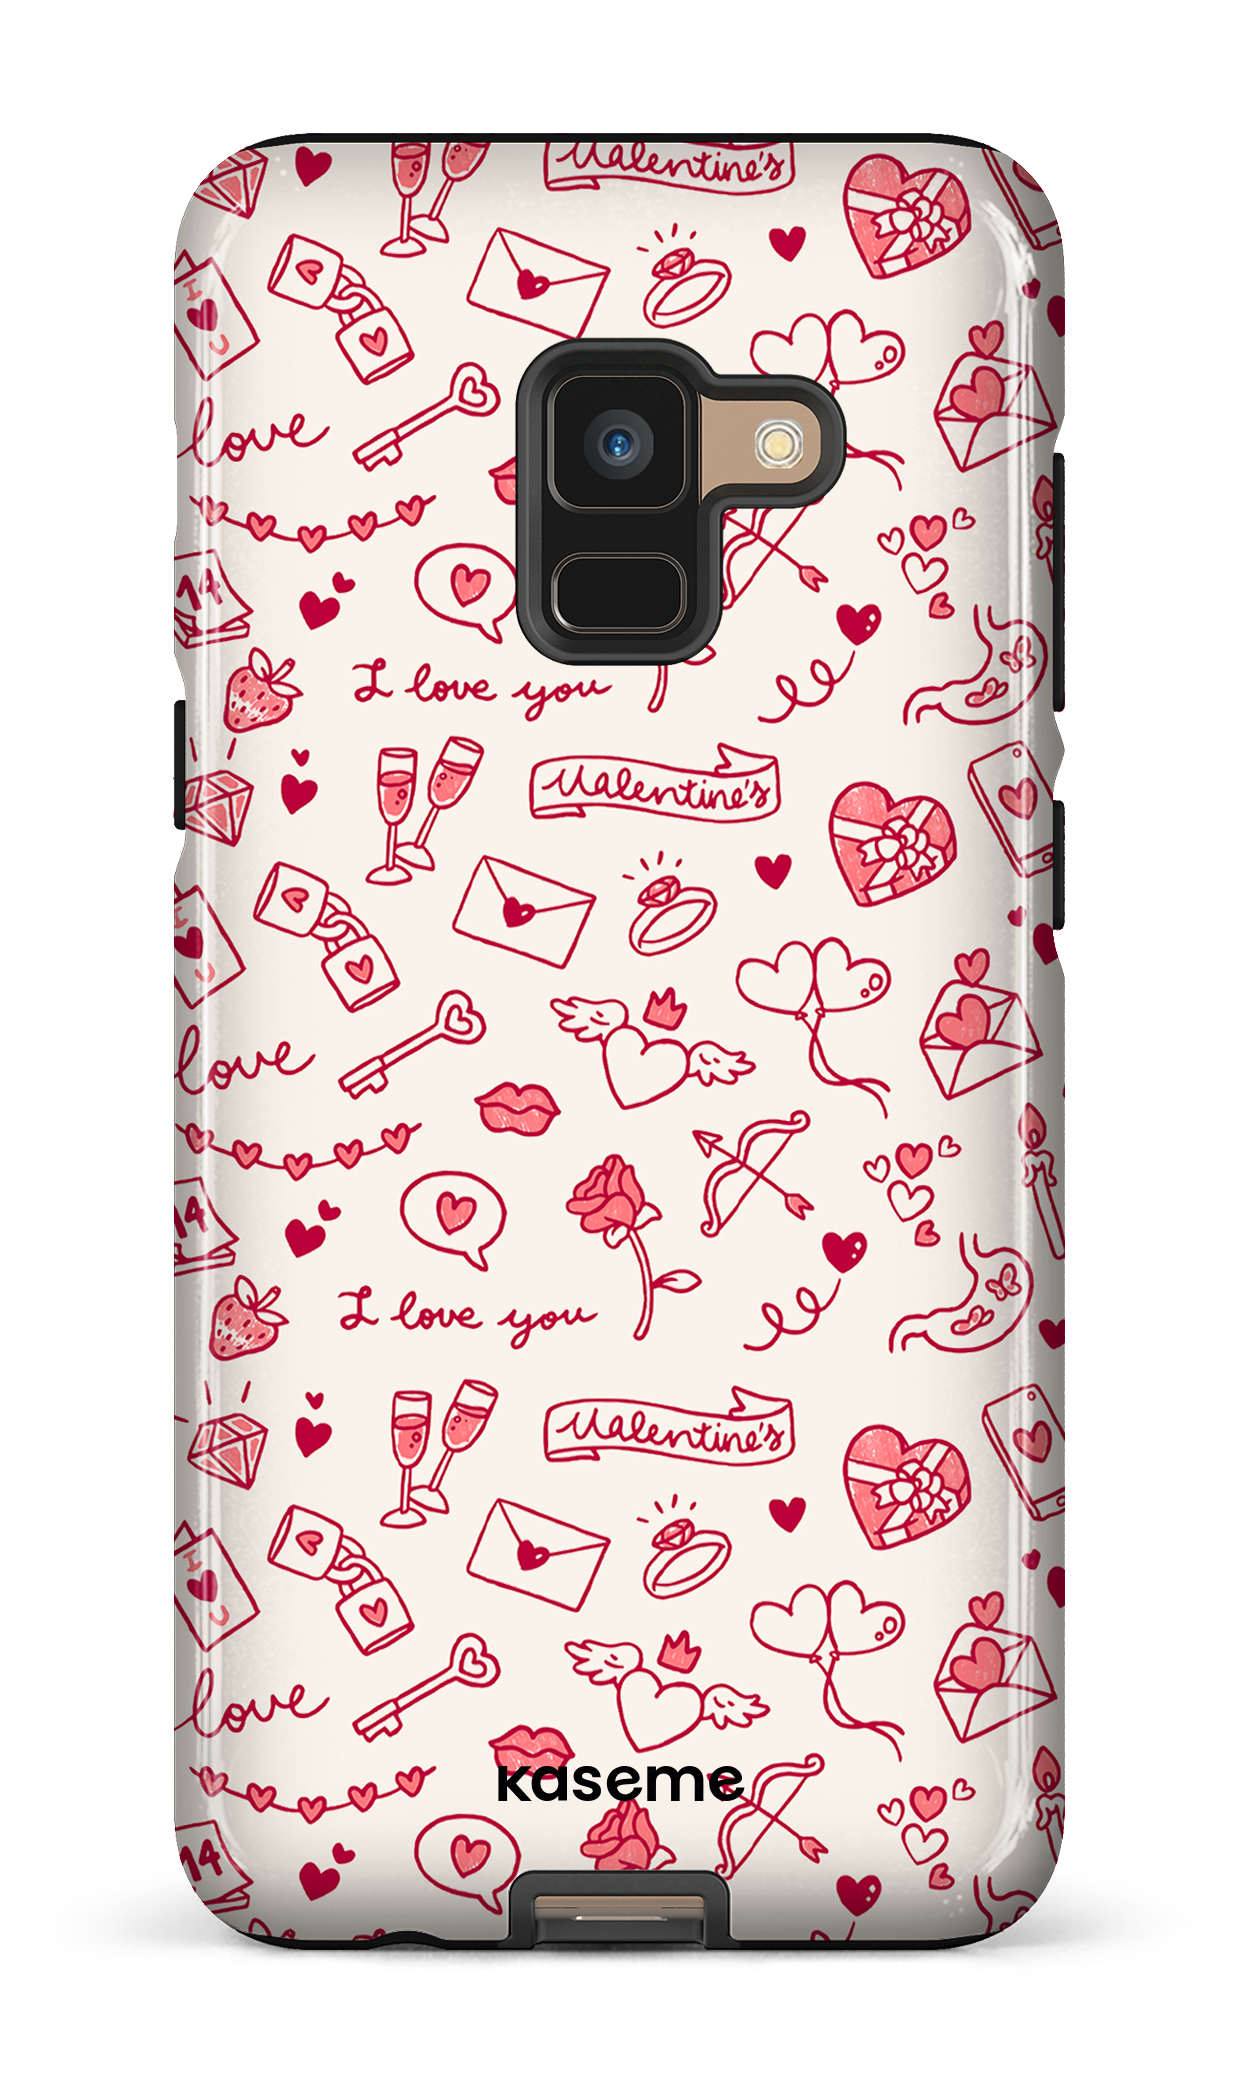 My Valentine - Galaxy A8